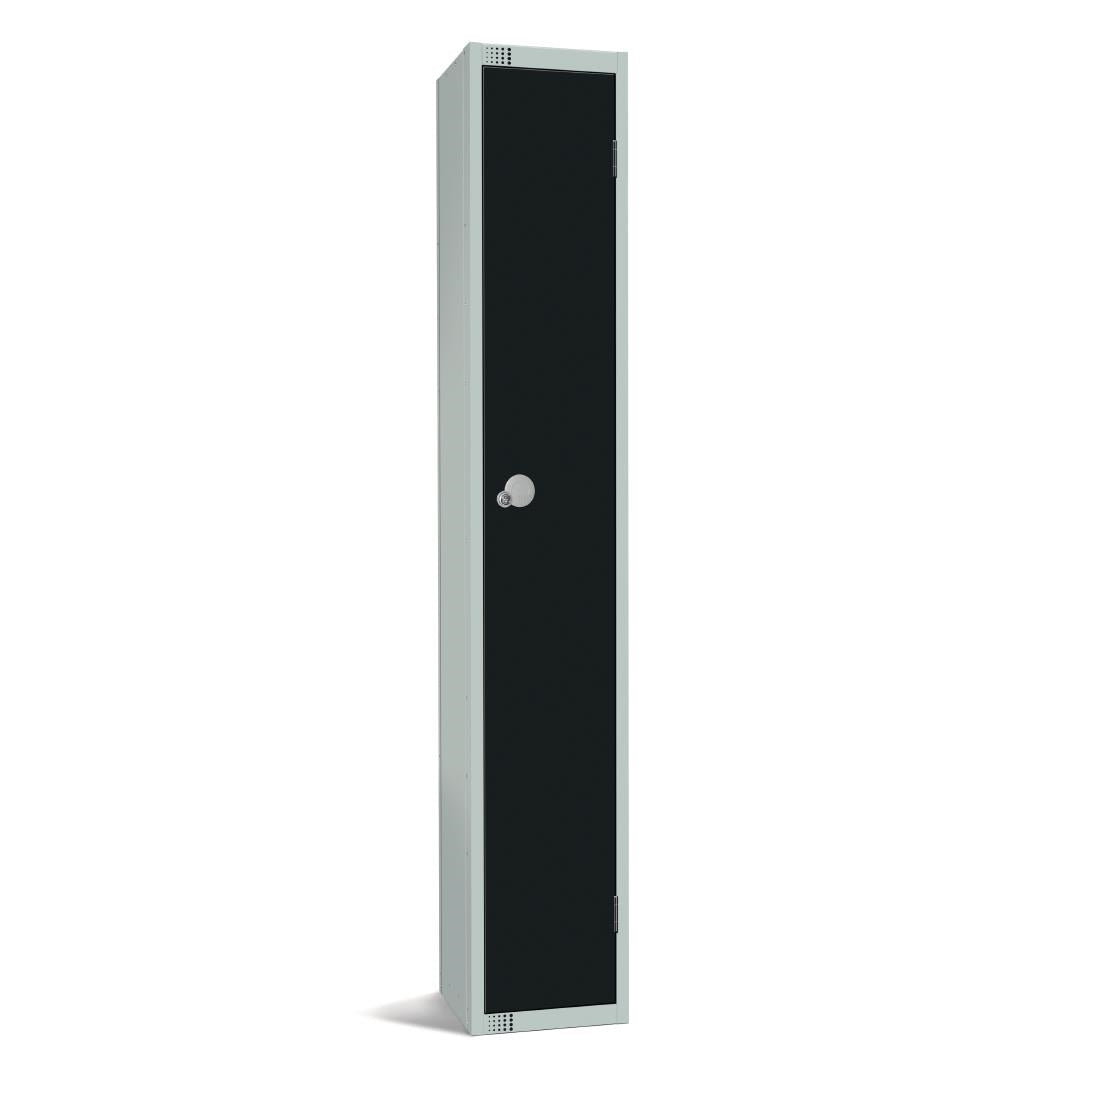 GR670-CLS Elite Single Door Manual Combination Locker Locker Black with sloping top JD Catering Equipment Solutions Ltd